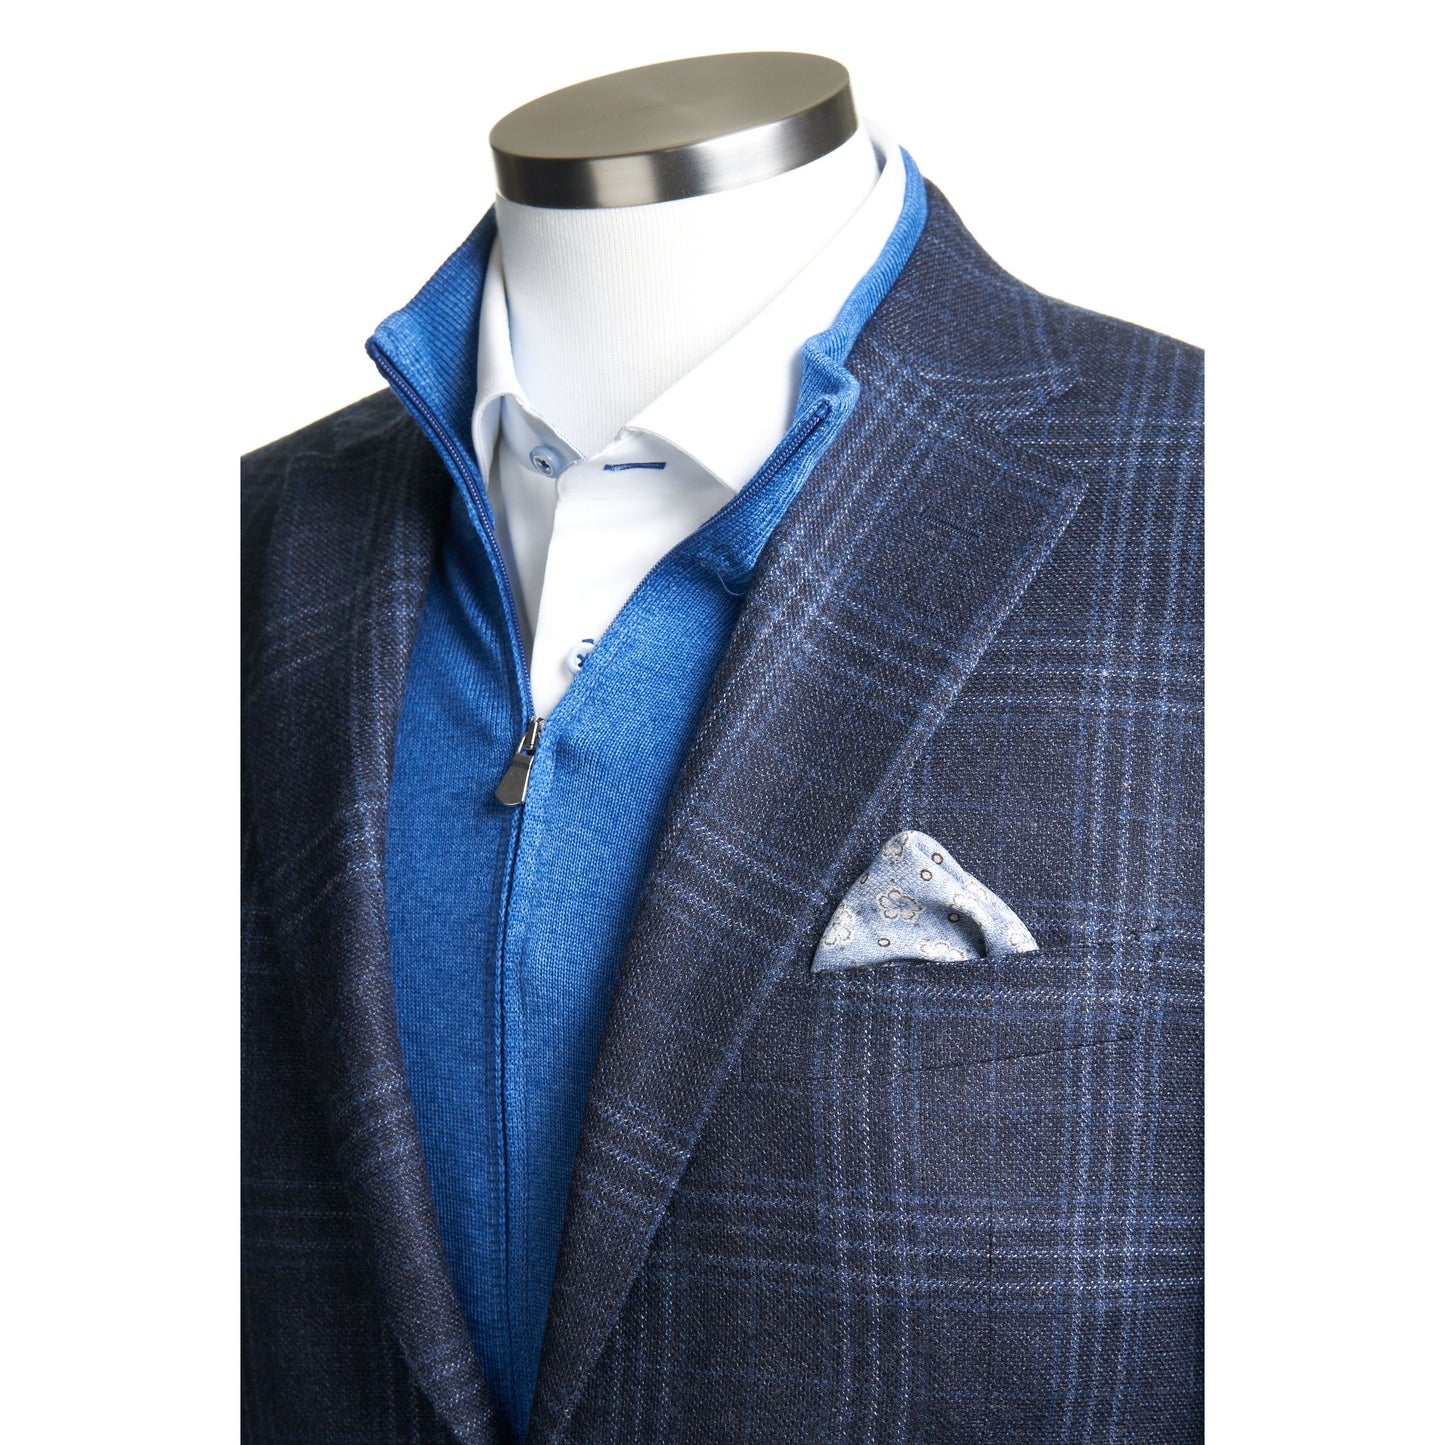 Canali Siena Model Wool Sport Coat in Blue Prince of Wales